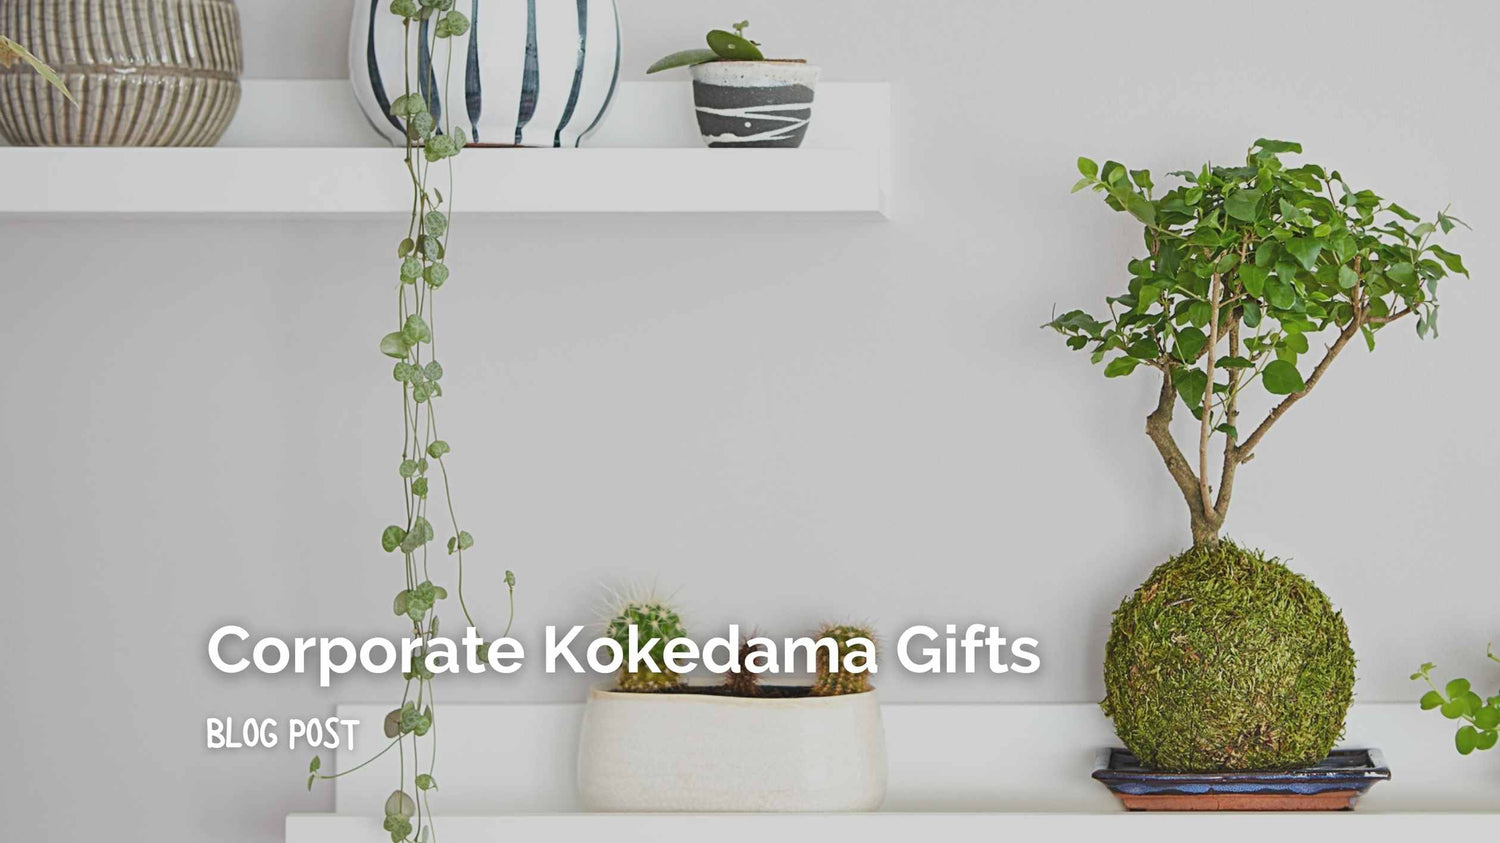 Why Kokedama Moss Plants Make the Perfect Corporate Gift